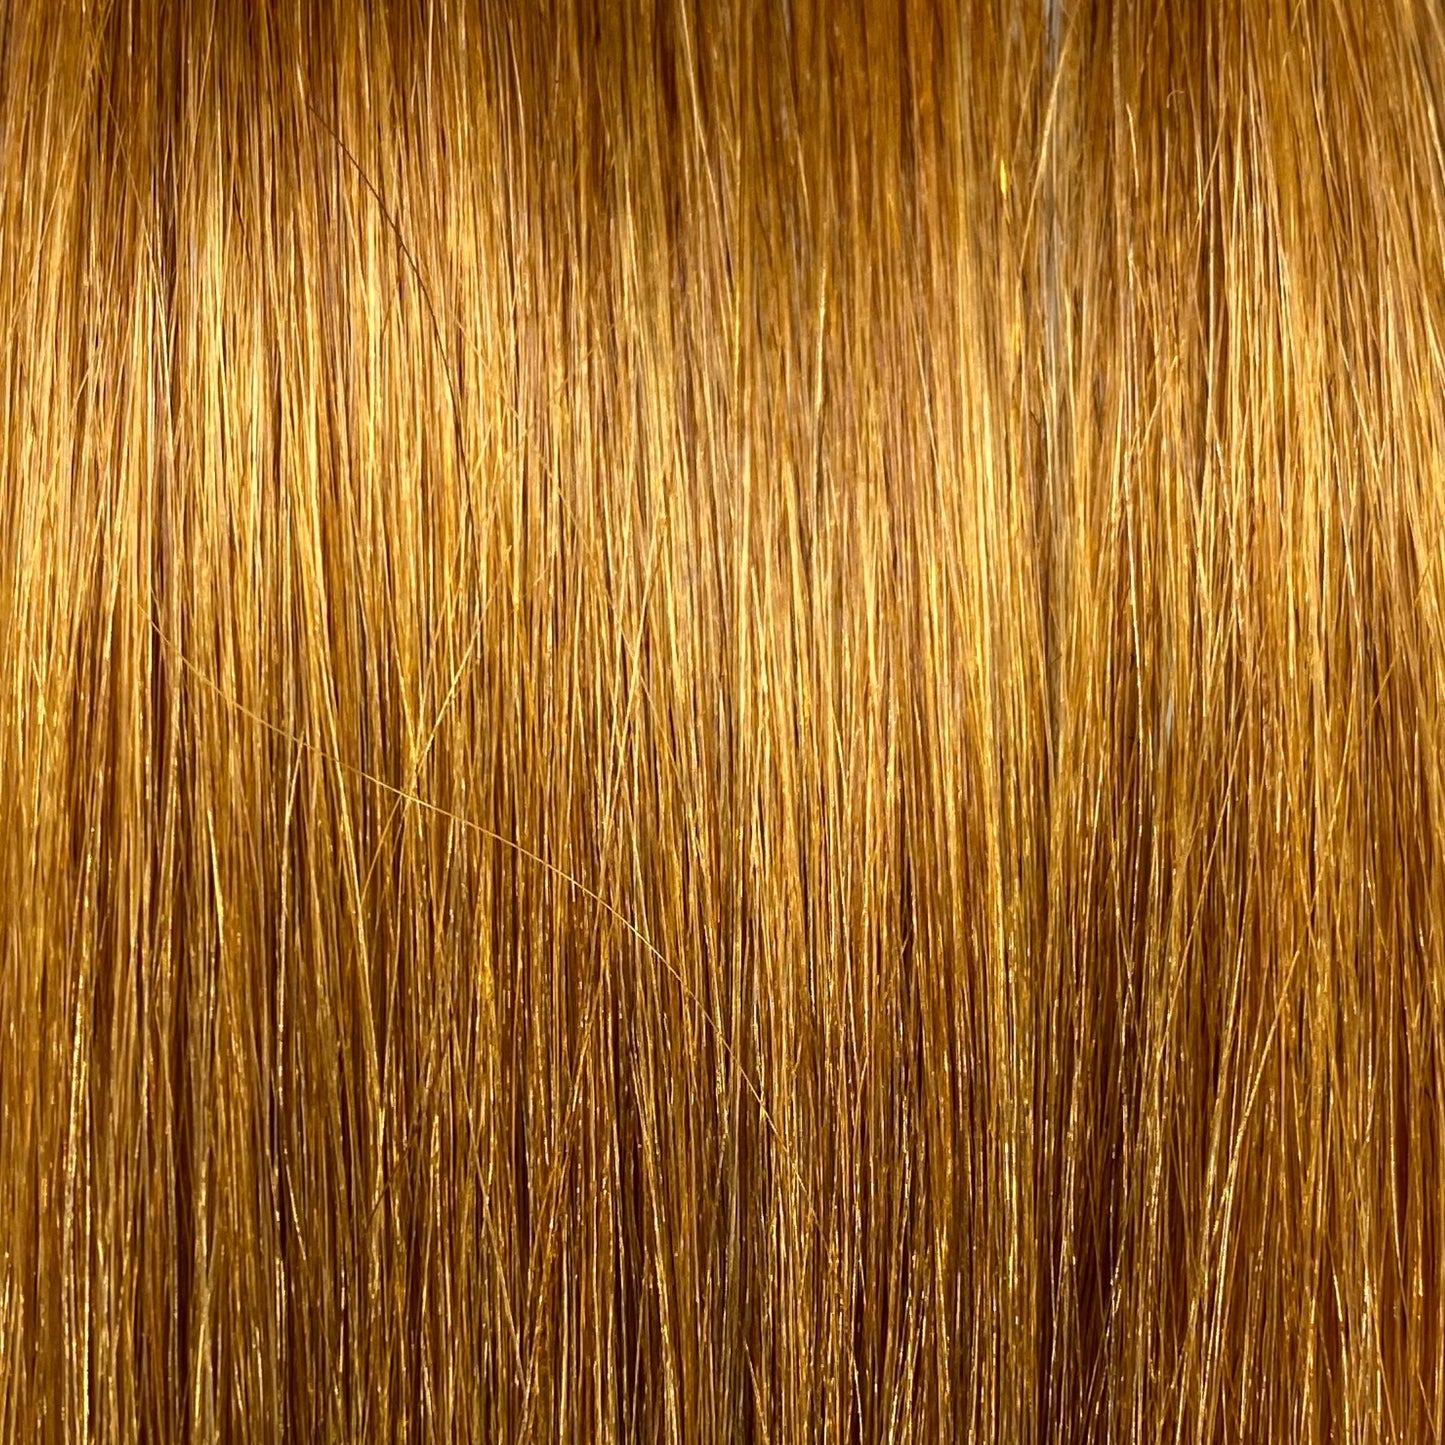 Fusion hair extensions #27 - 50cm/20 inches - Golden Blonde Fusion Euro So Cap 